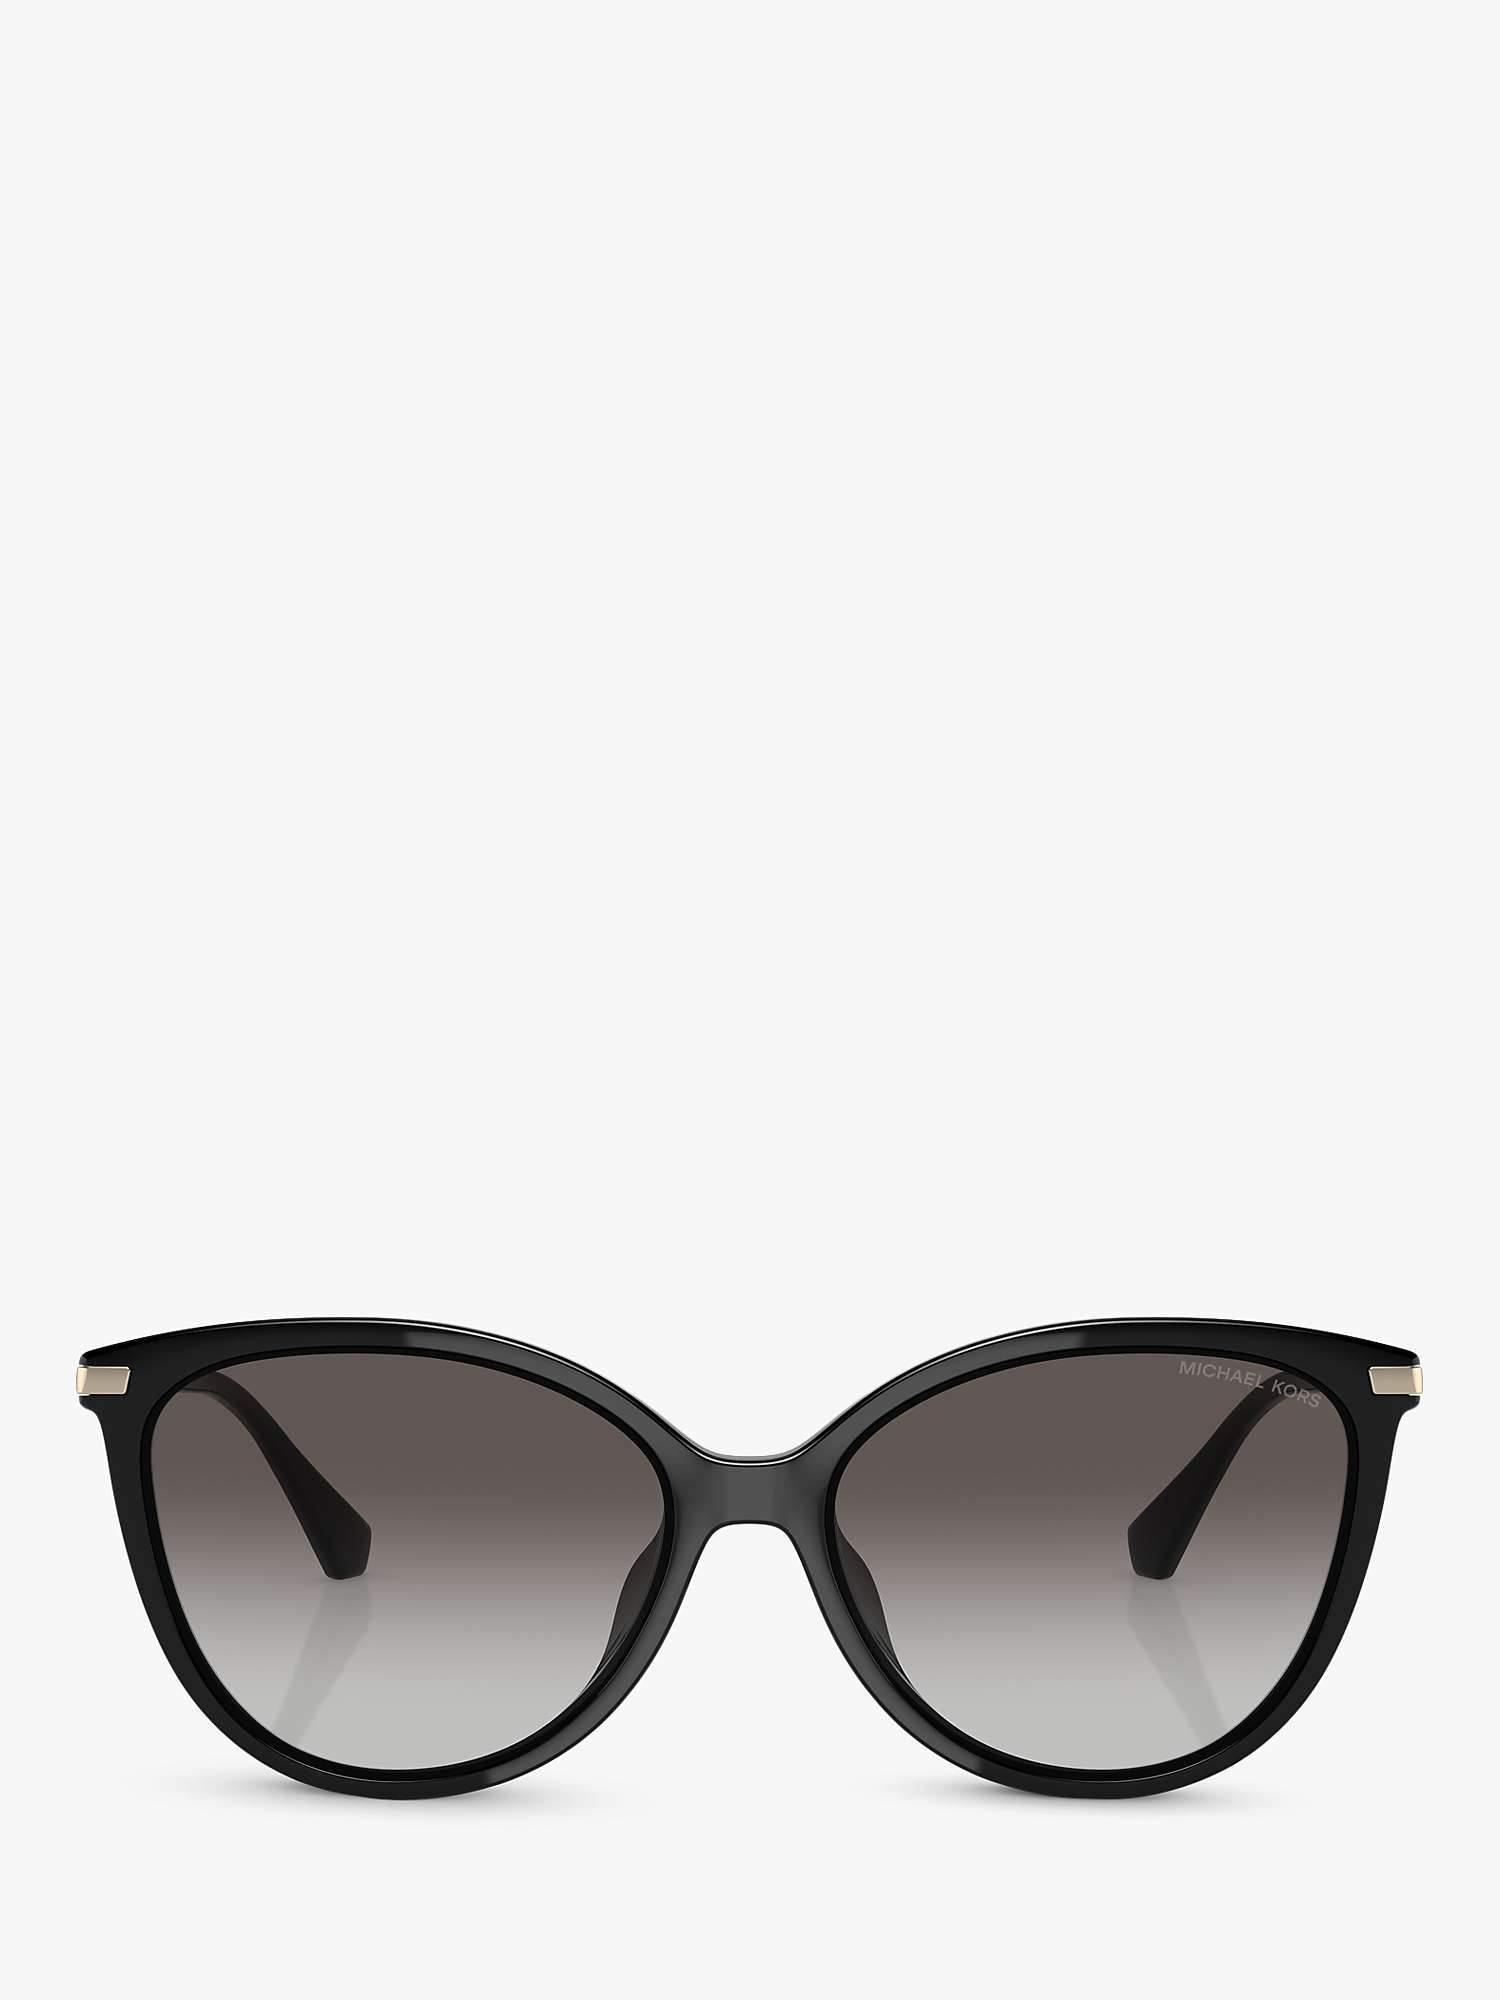 Buy Michael Kors MK2184U Women's Dupont Butterfly Sunglasses, Black/Grey Gradient Online at johnlewis.com